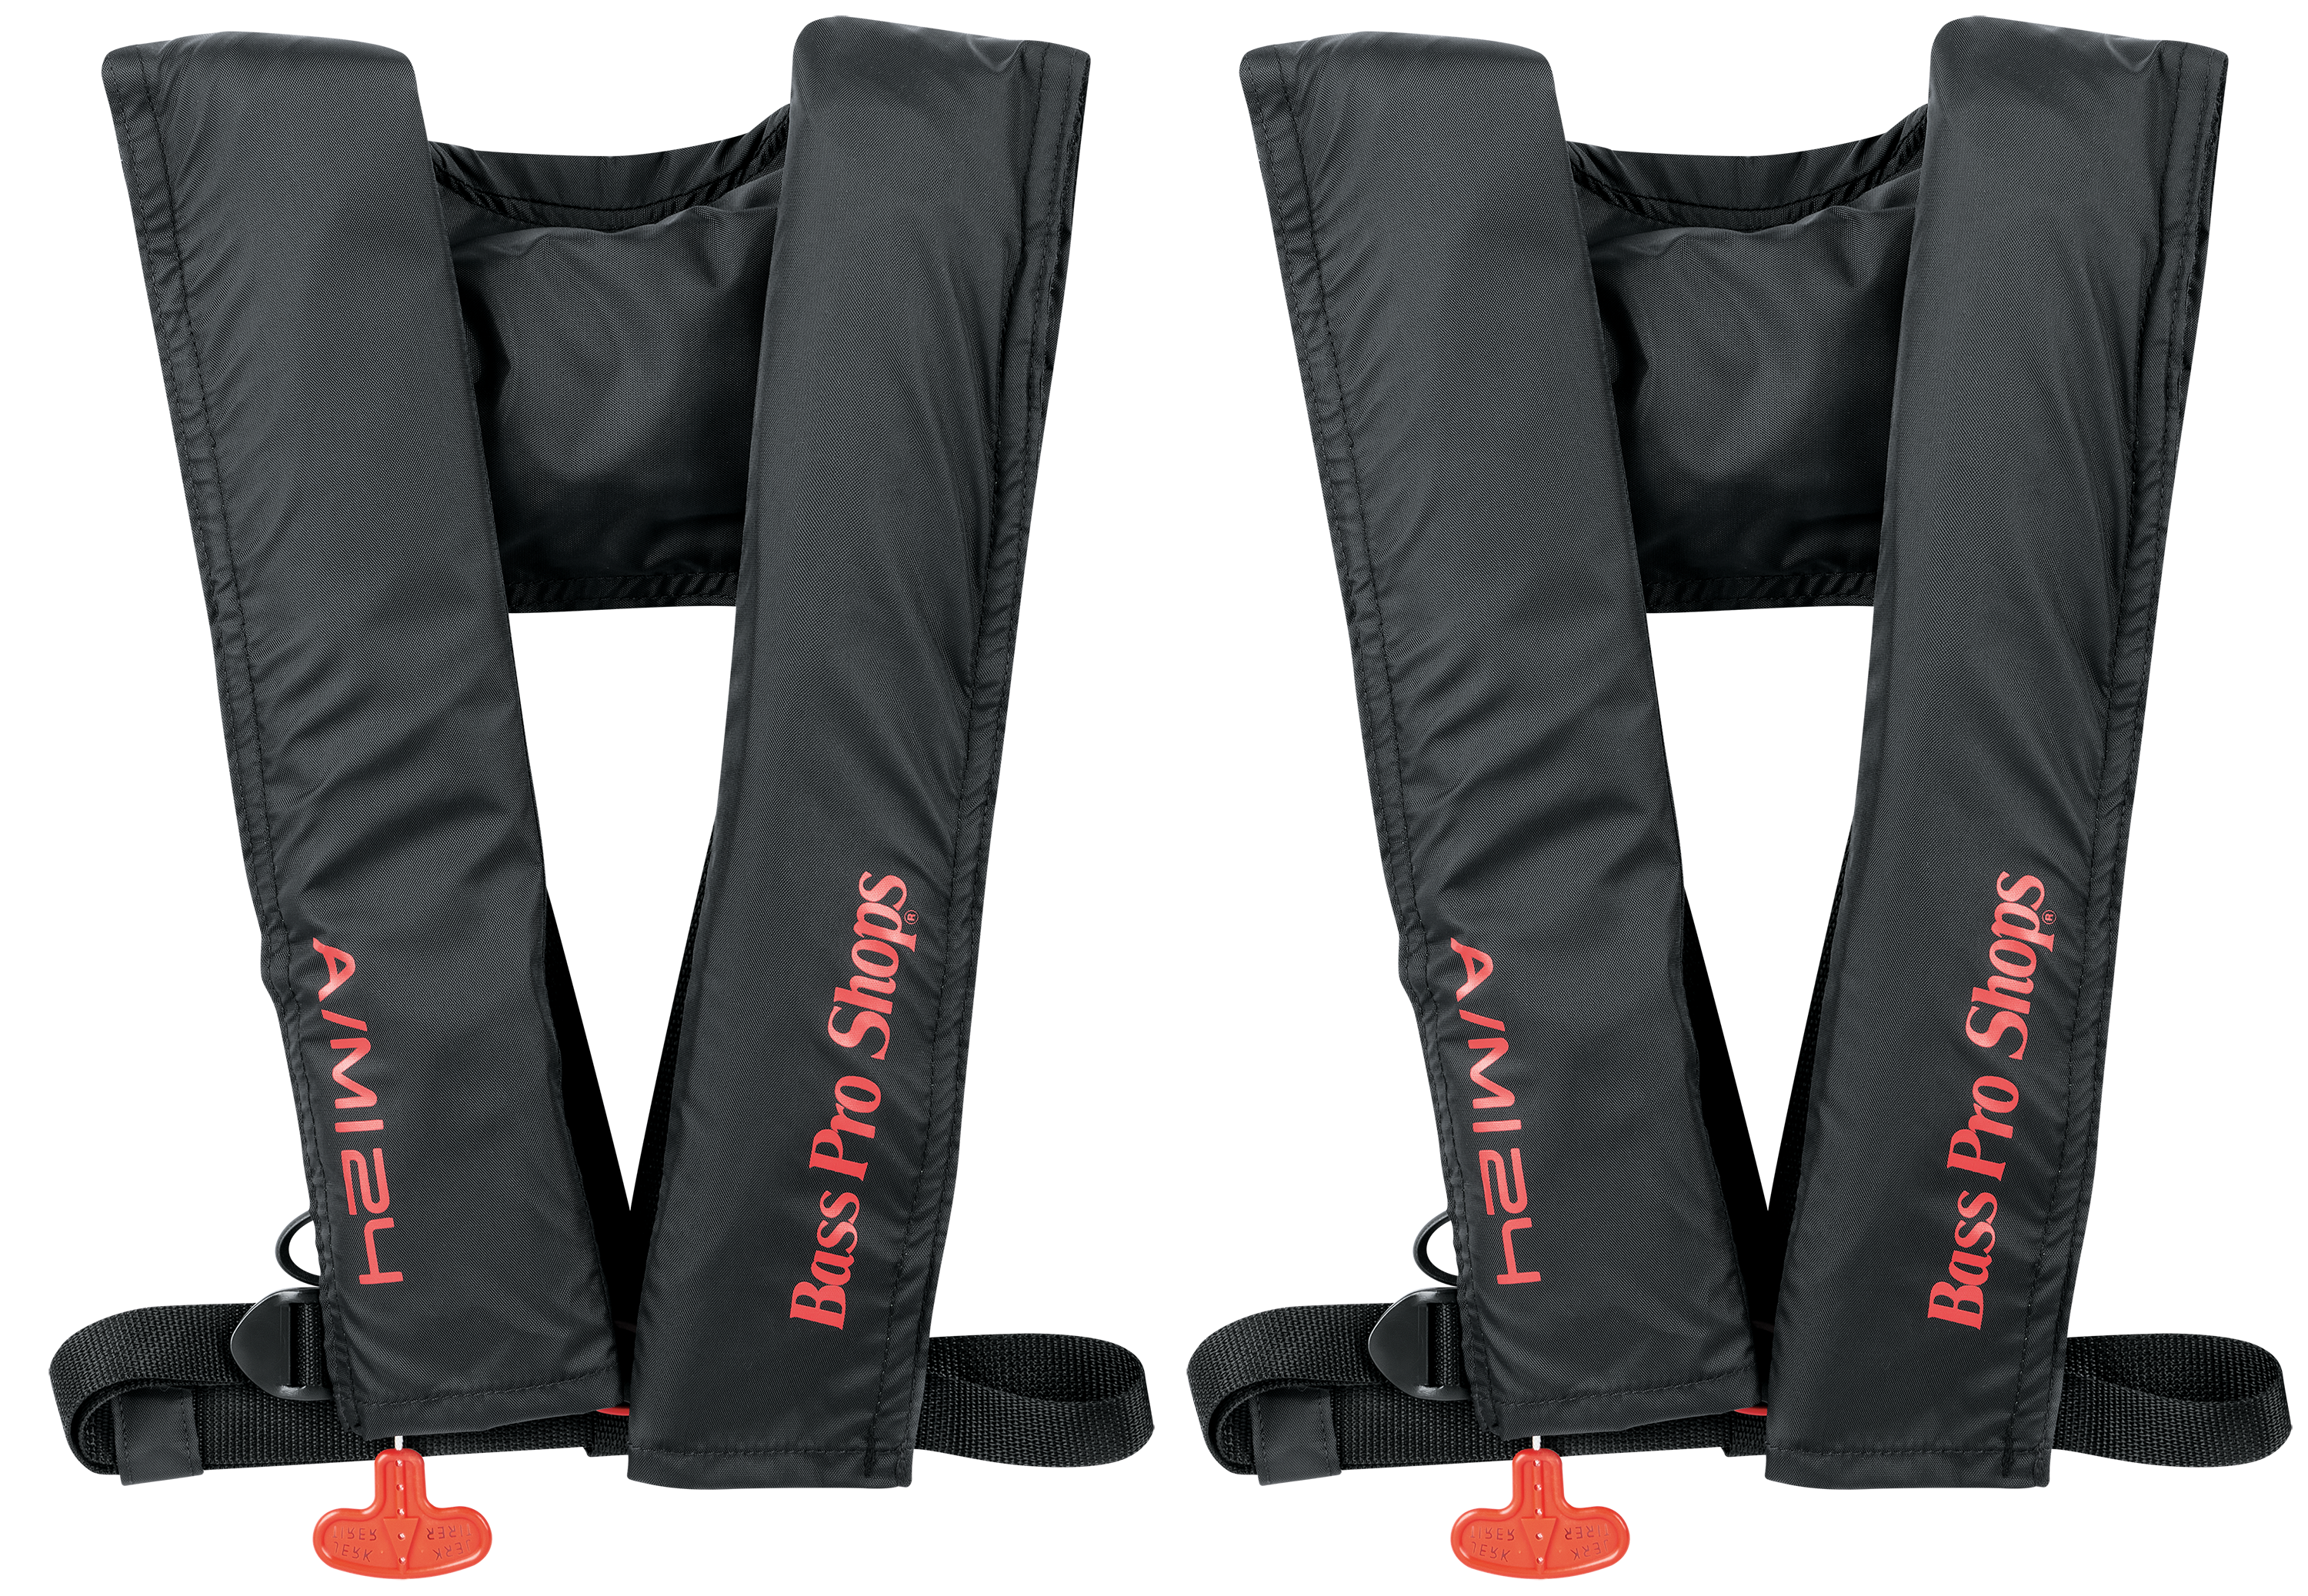 Bass Pro Shops AM24 Auto/Manual Inflatable Life Vest 2-Pack